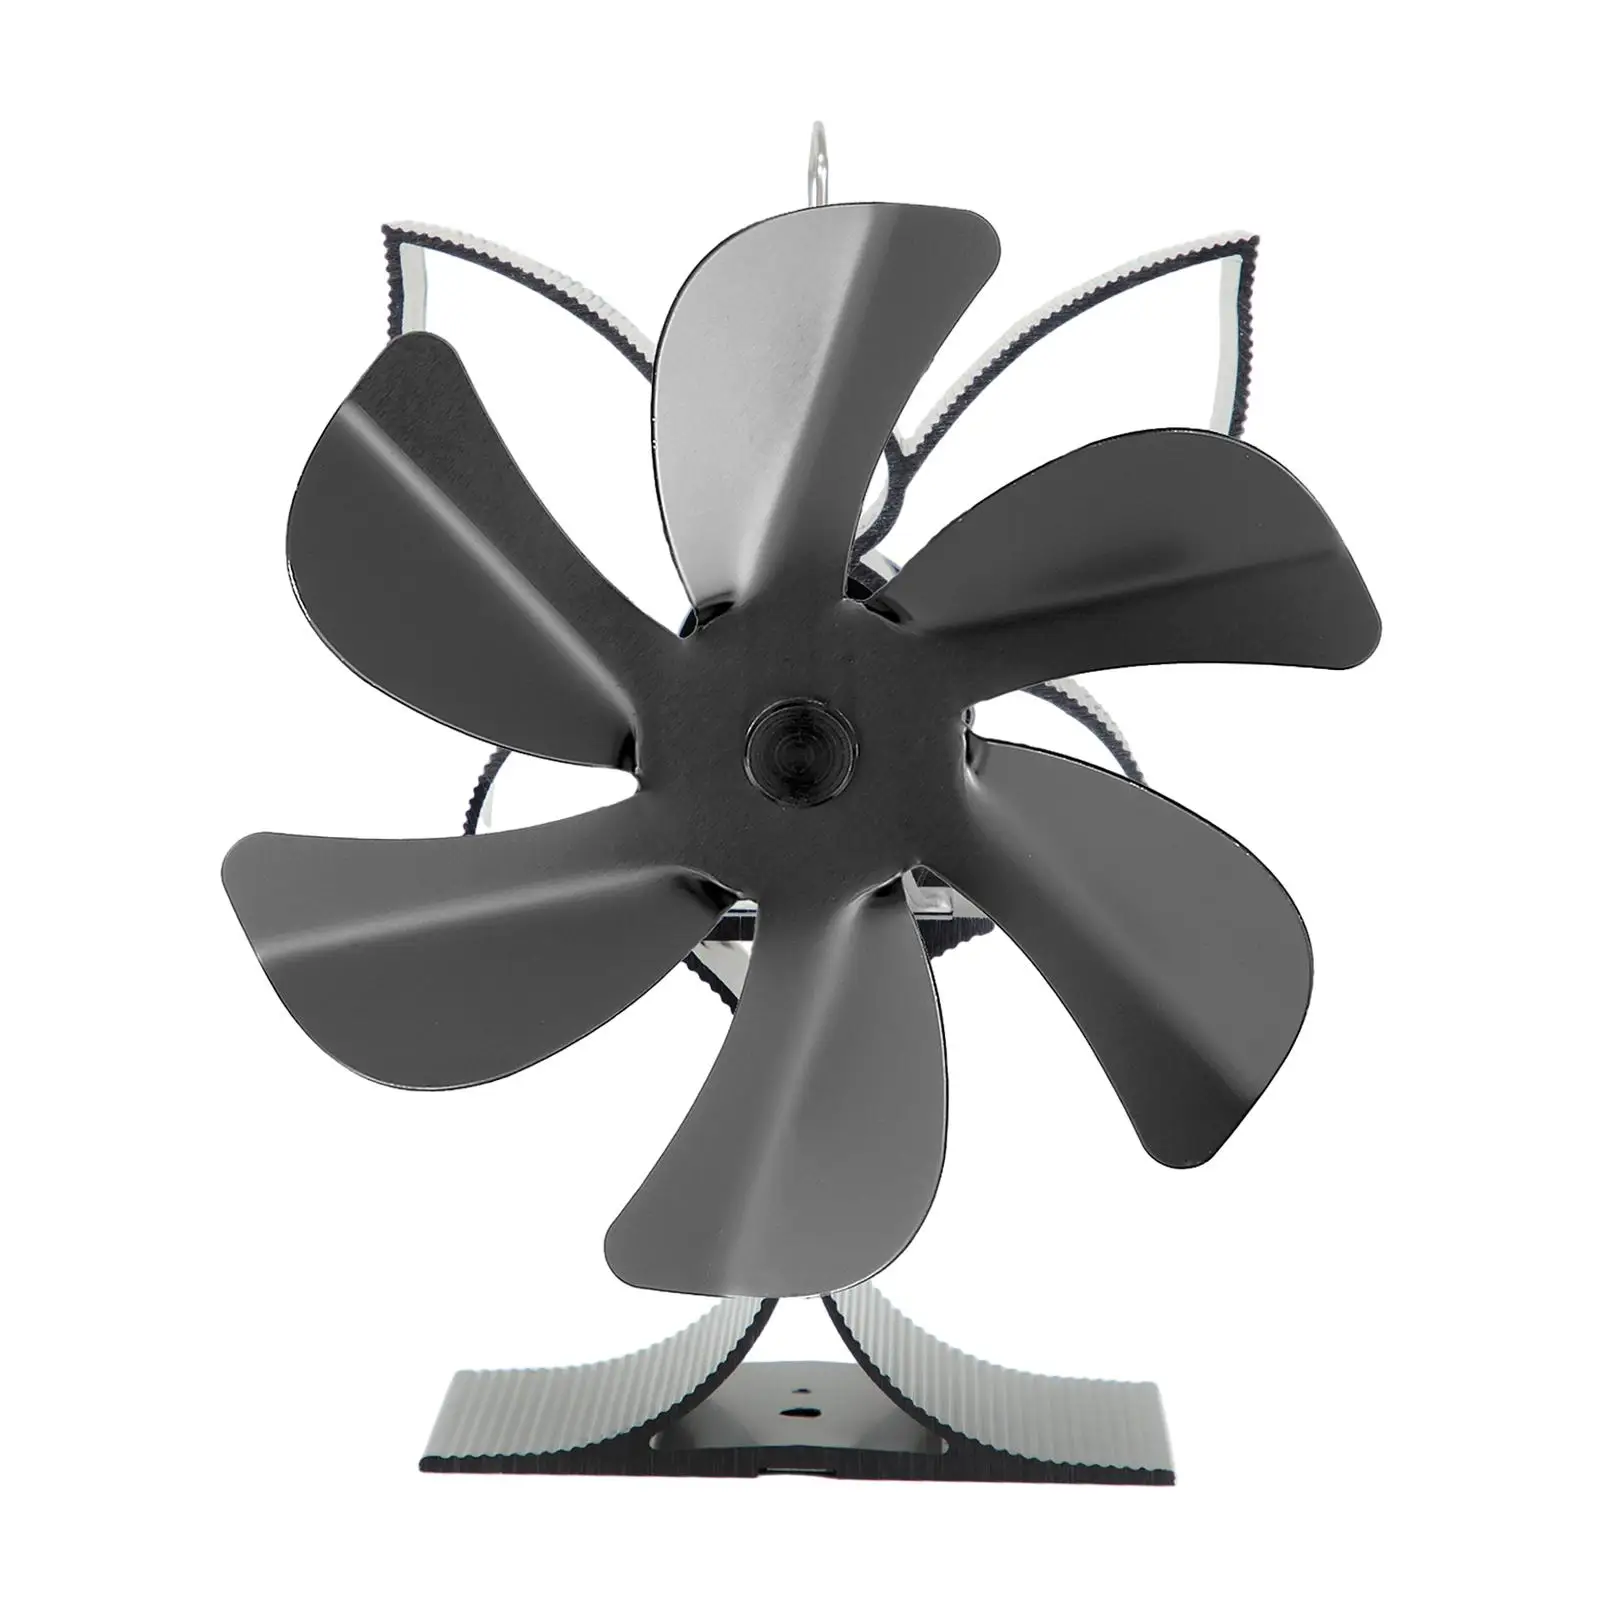 

Xmas Logs Burner Heat Powered Fireplace Fan Aluminum Alloy Energy Saving Sturdy Versatile Low Noise Height 18.5cm